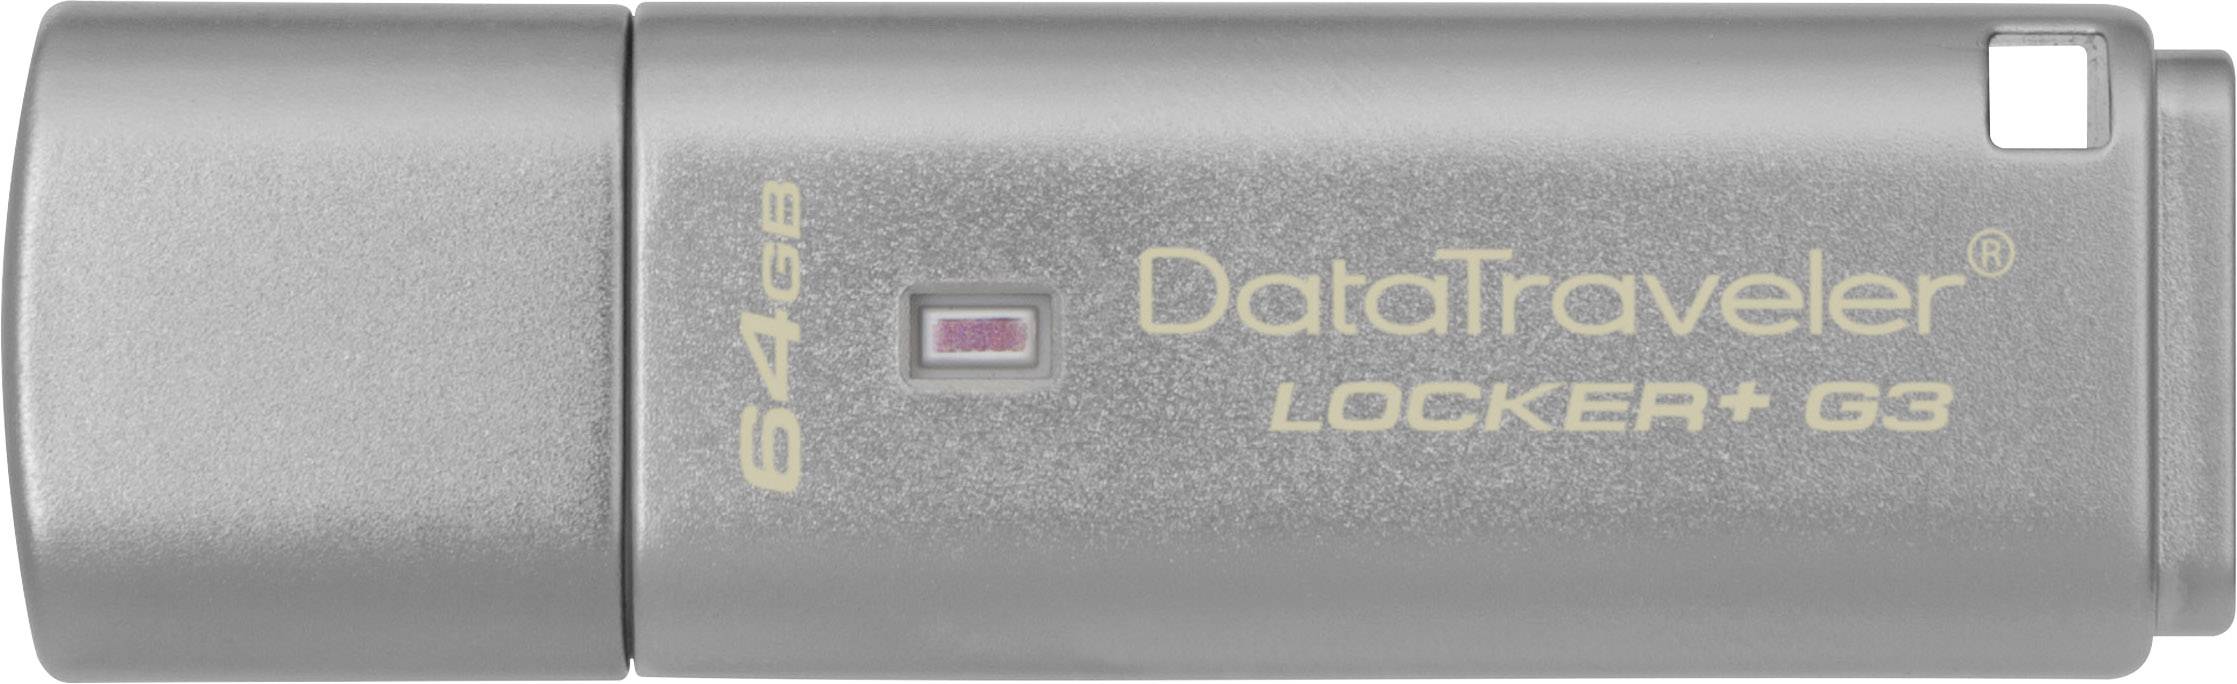 Kingston DataTraveler Locker+ G3 USB stick 64 GB Silver DTLPG3/64GB USB 3.2  1st Gen (USB 3.0) | Conrad.com